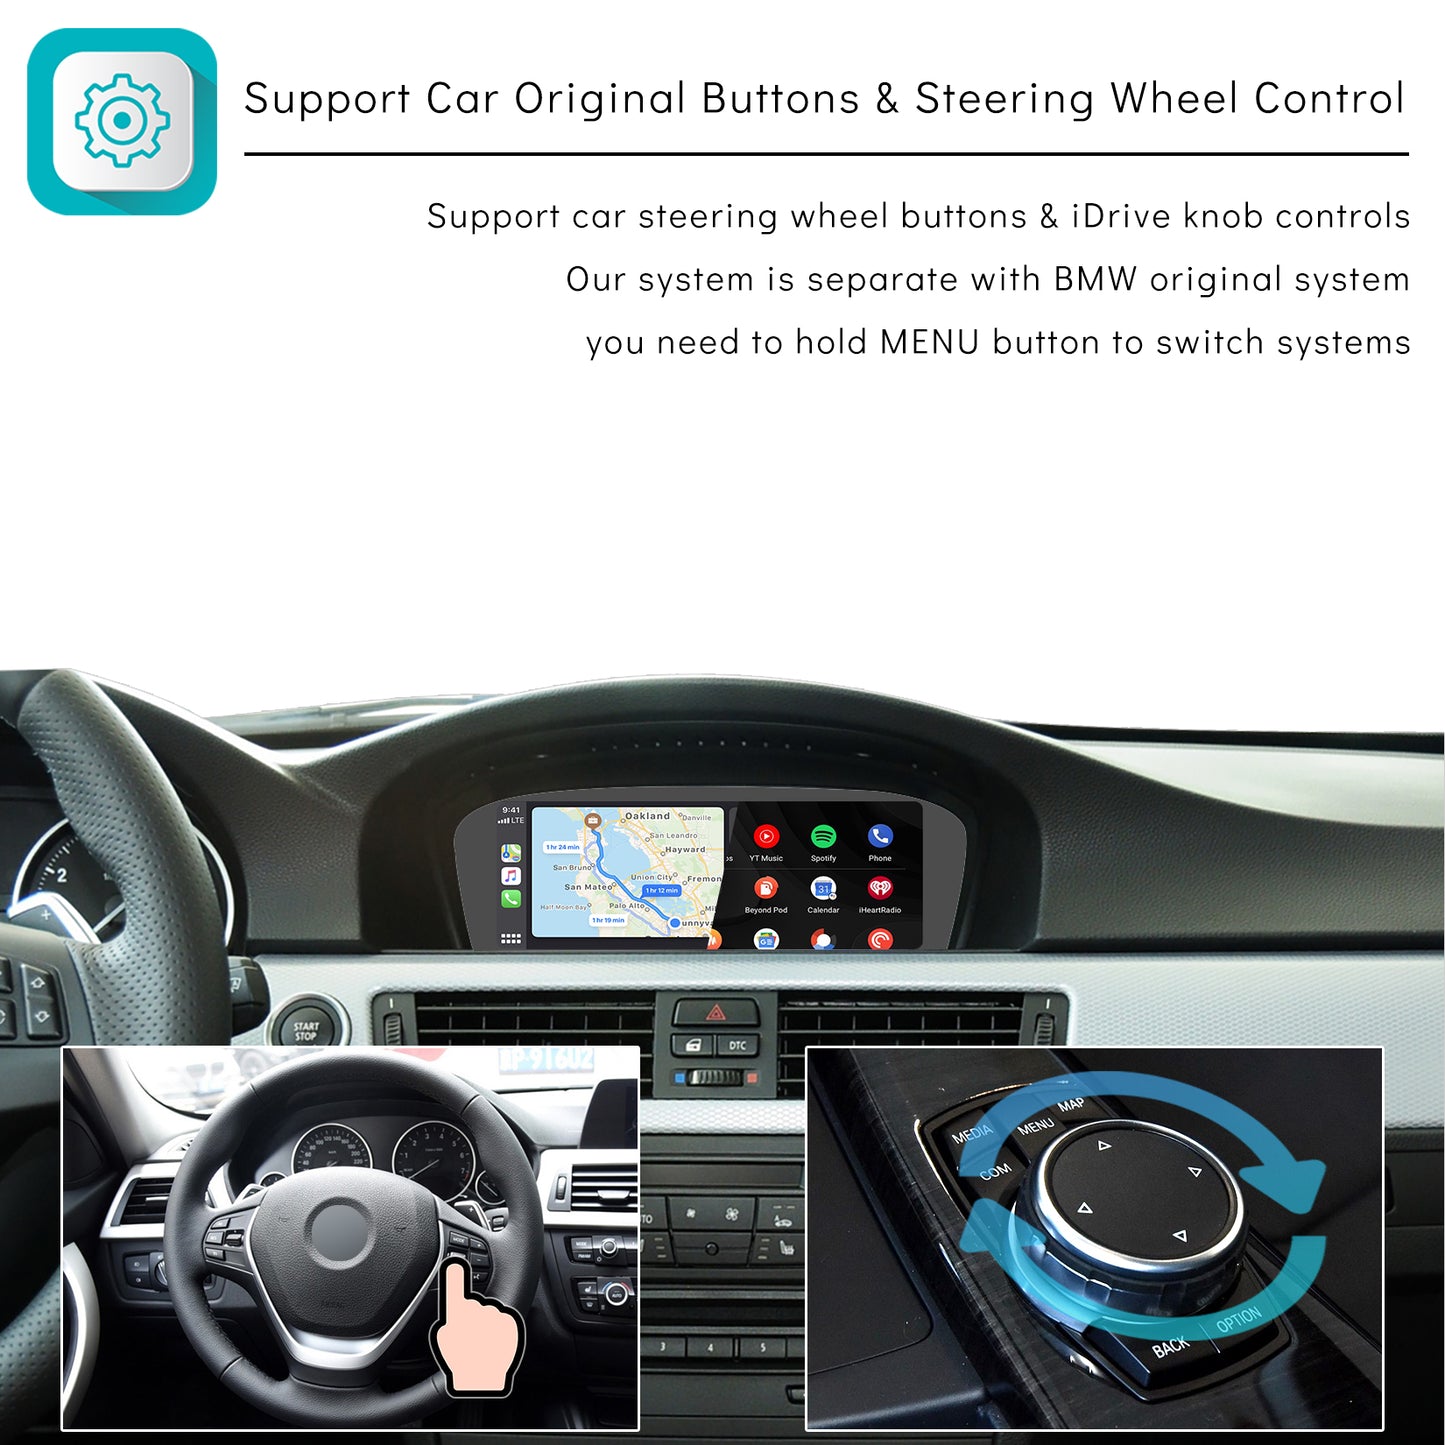 CarProKit for BMW Wireless CarPlay Android Auto Retrofit Kit + Backup Camera Support BMW 1/2/3/4/5/6/7 Series X1-X7 CIC | NBT System 2009-2016